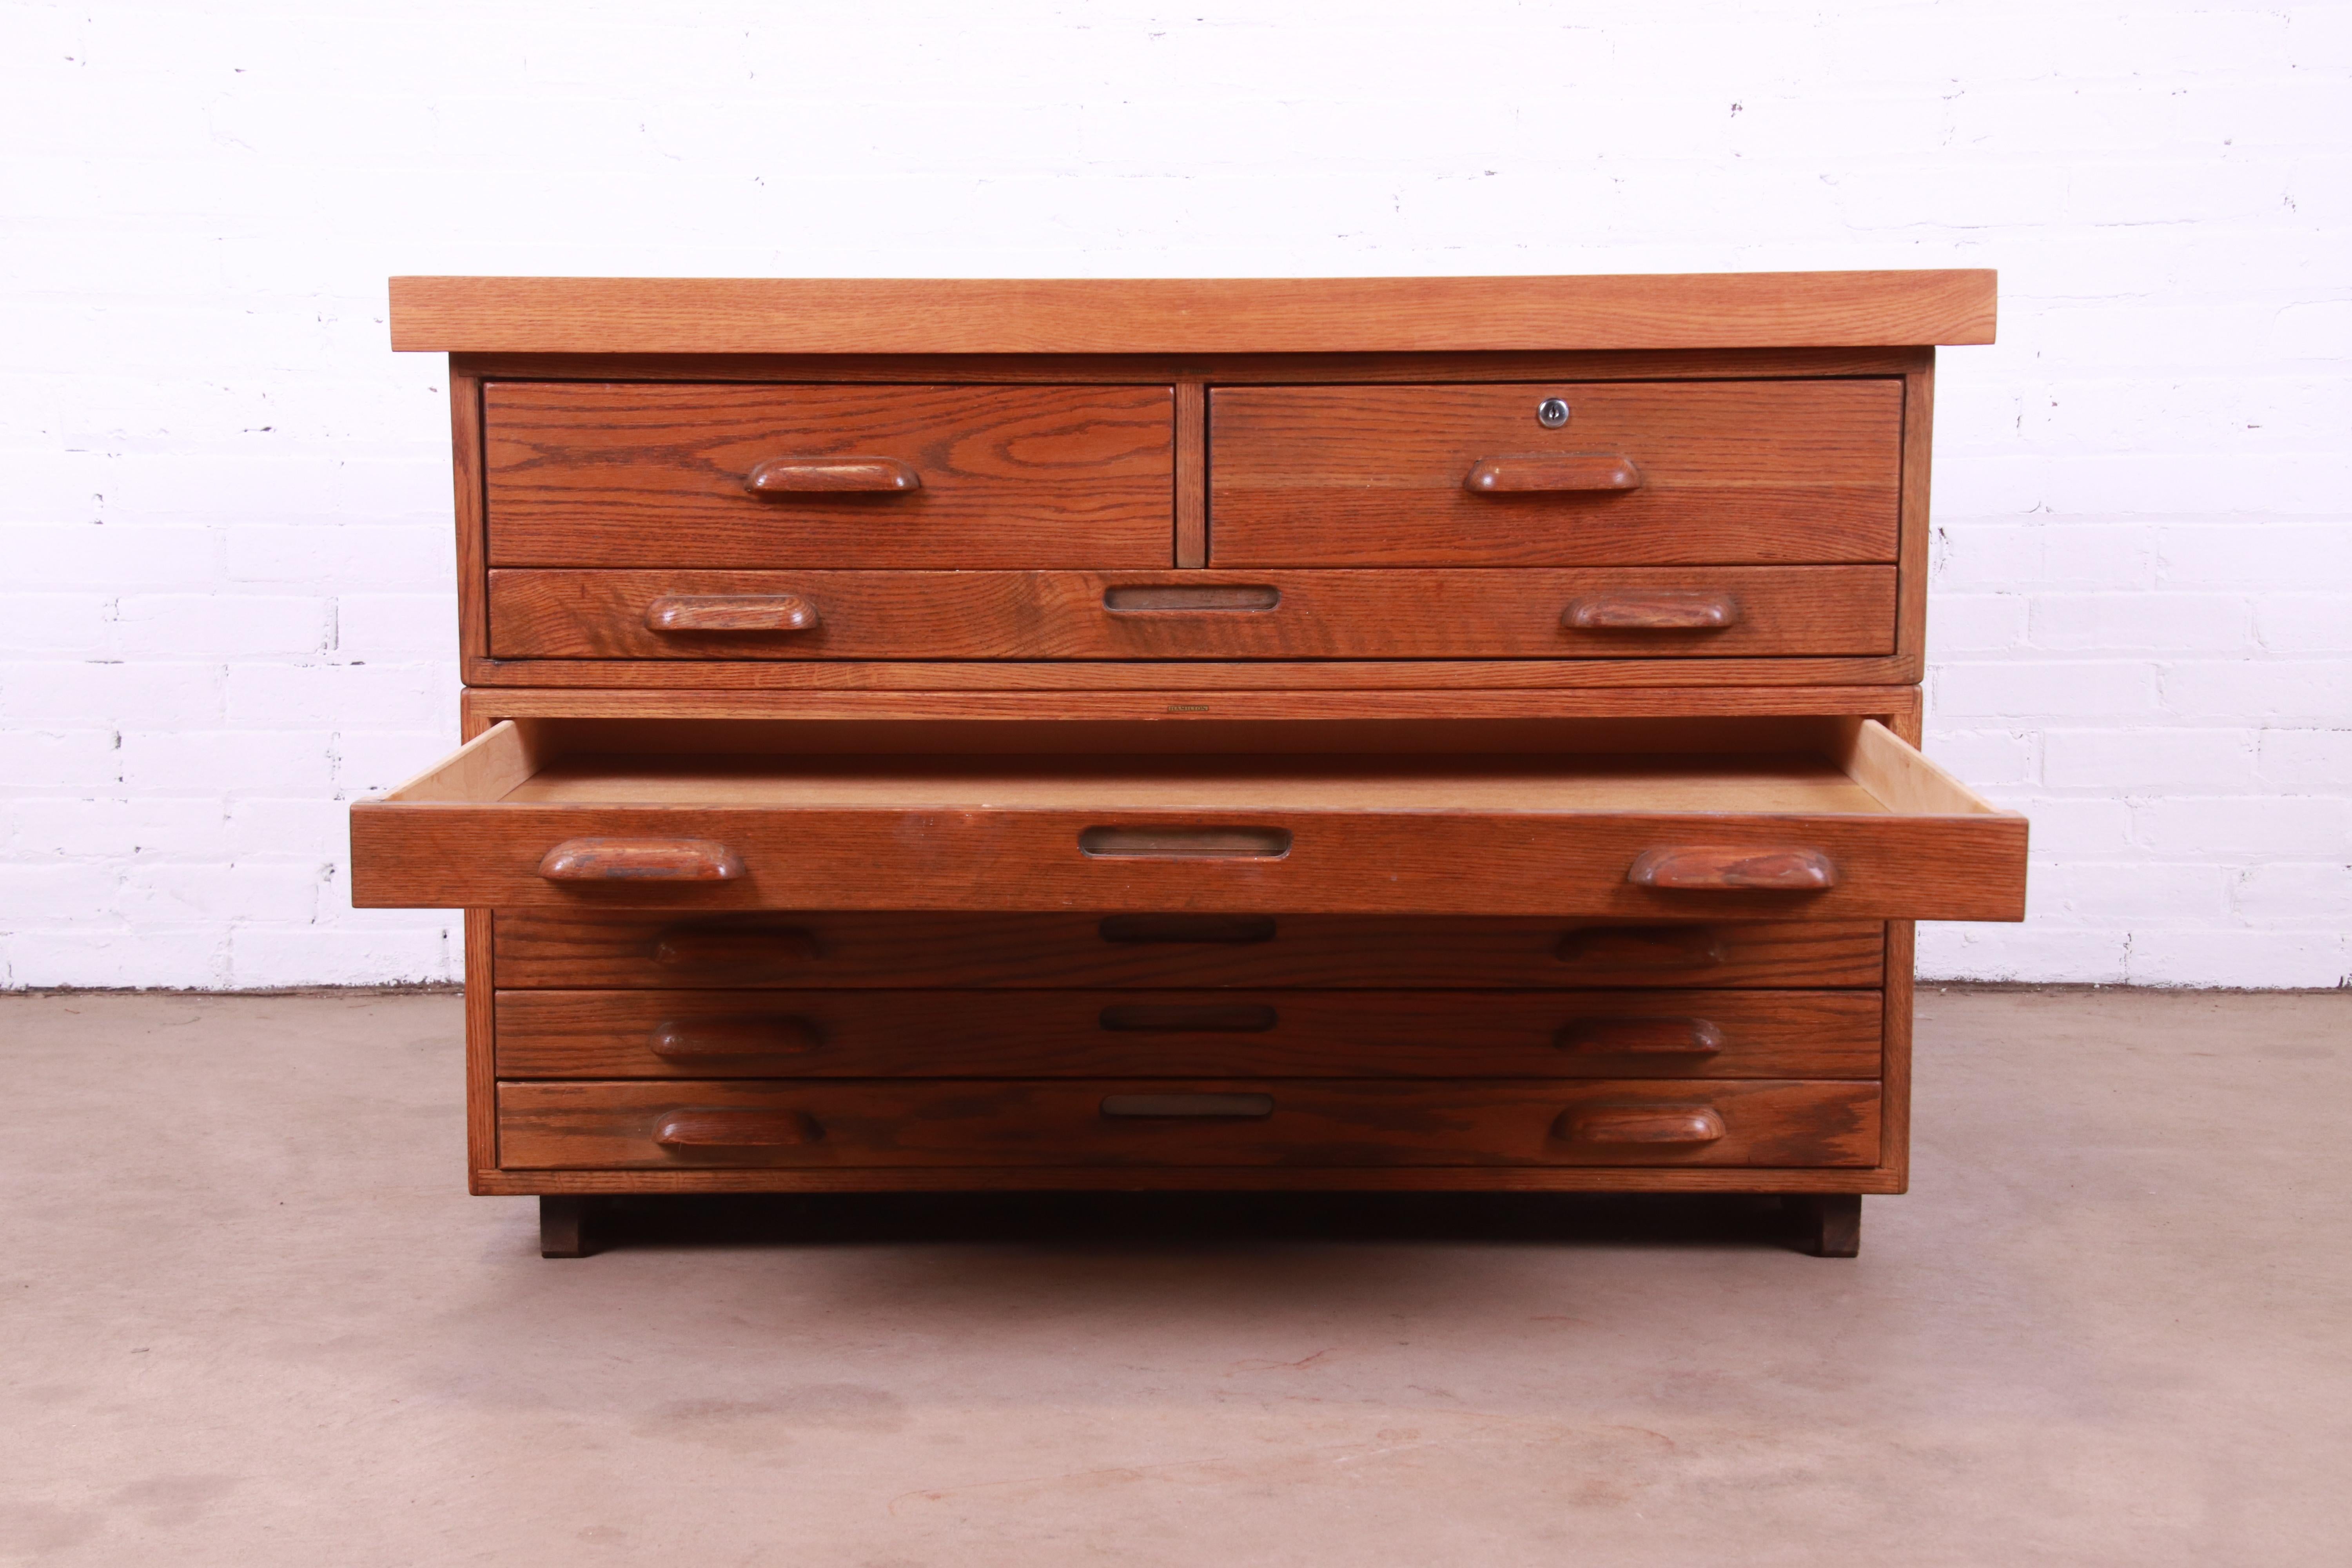 Vintage Arts & Crafts Oak Architect's Blueprint Flat File Cabinet by Hamilton 1